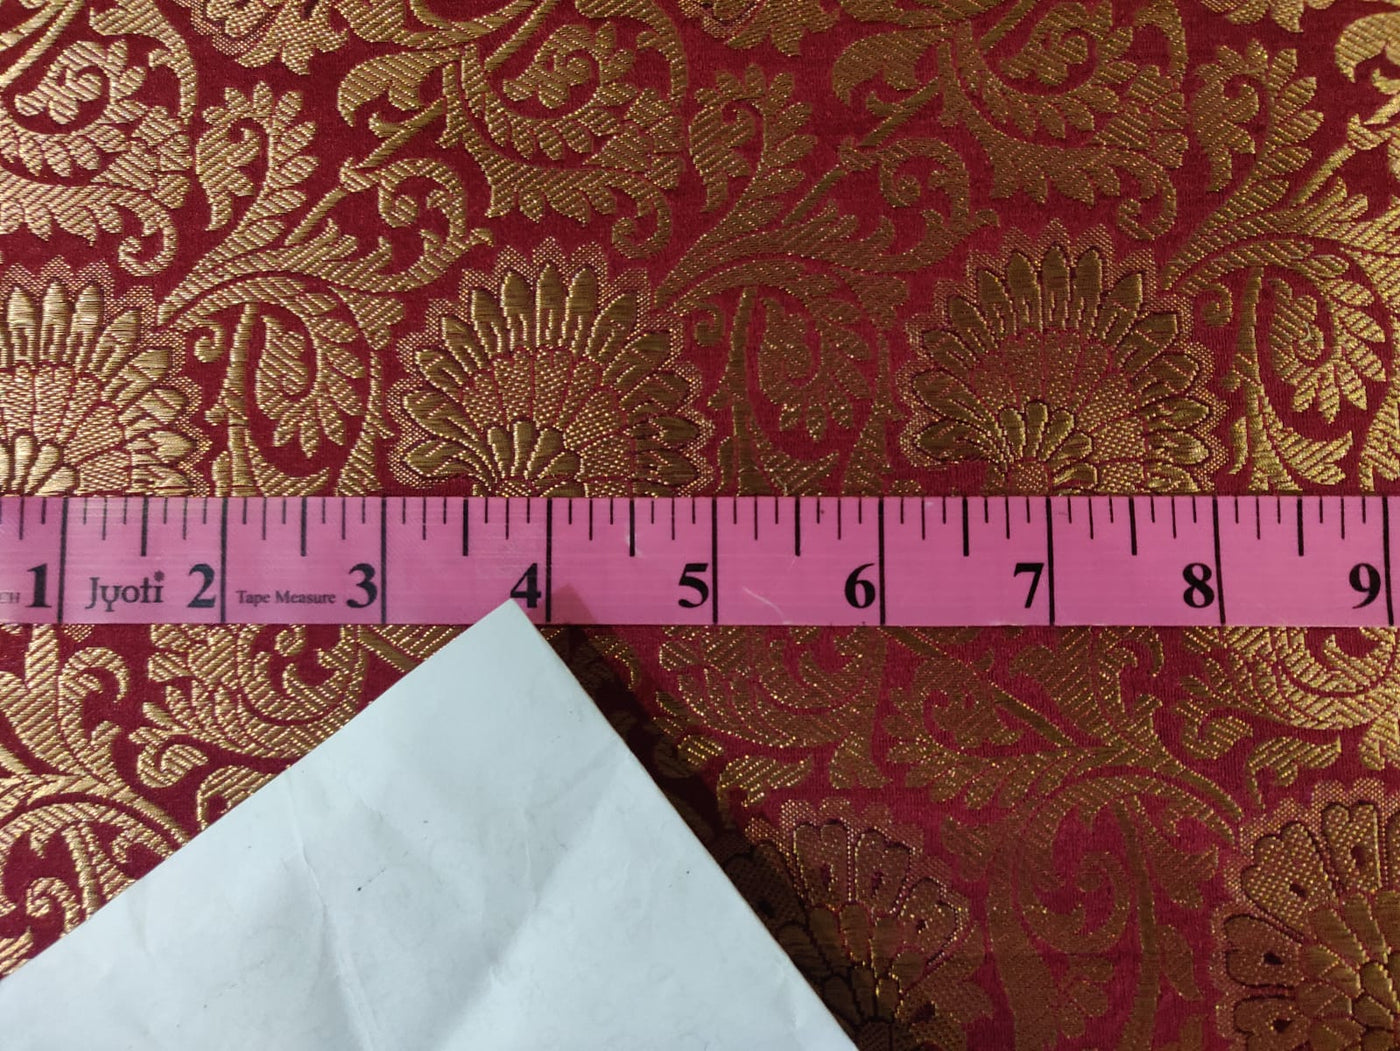 Brocade fabric handloom woven mughal RED / gold motifs color 44" wide BRO114[5]